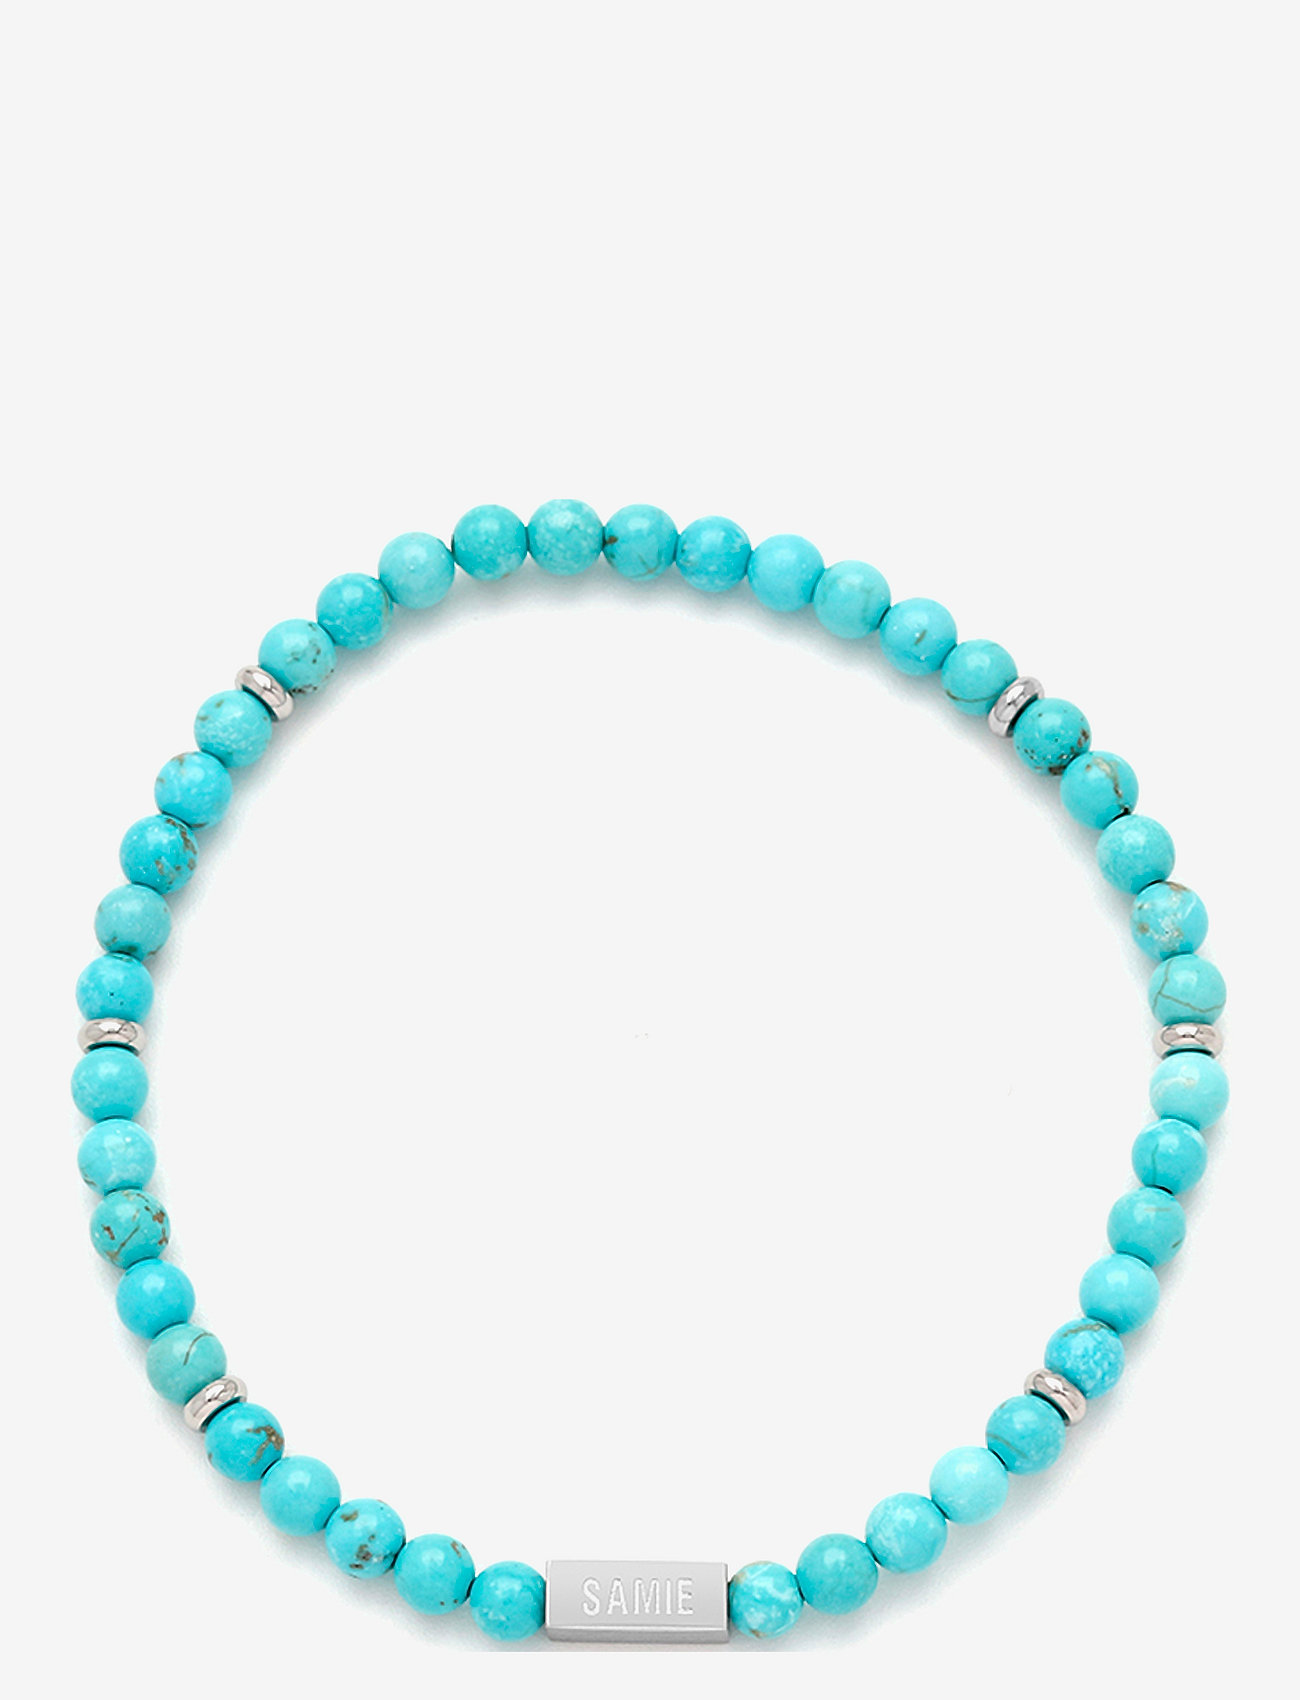 Samie - Matheo - Bracelet with turquoise beads - birthday gifts - swsturquoise - 0